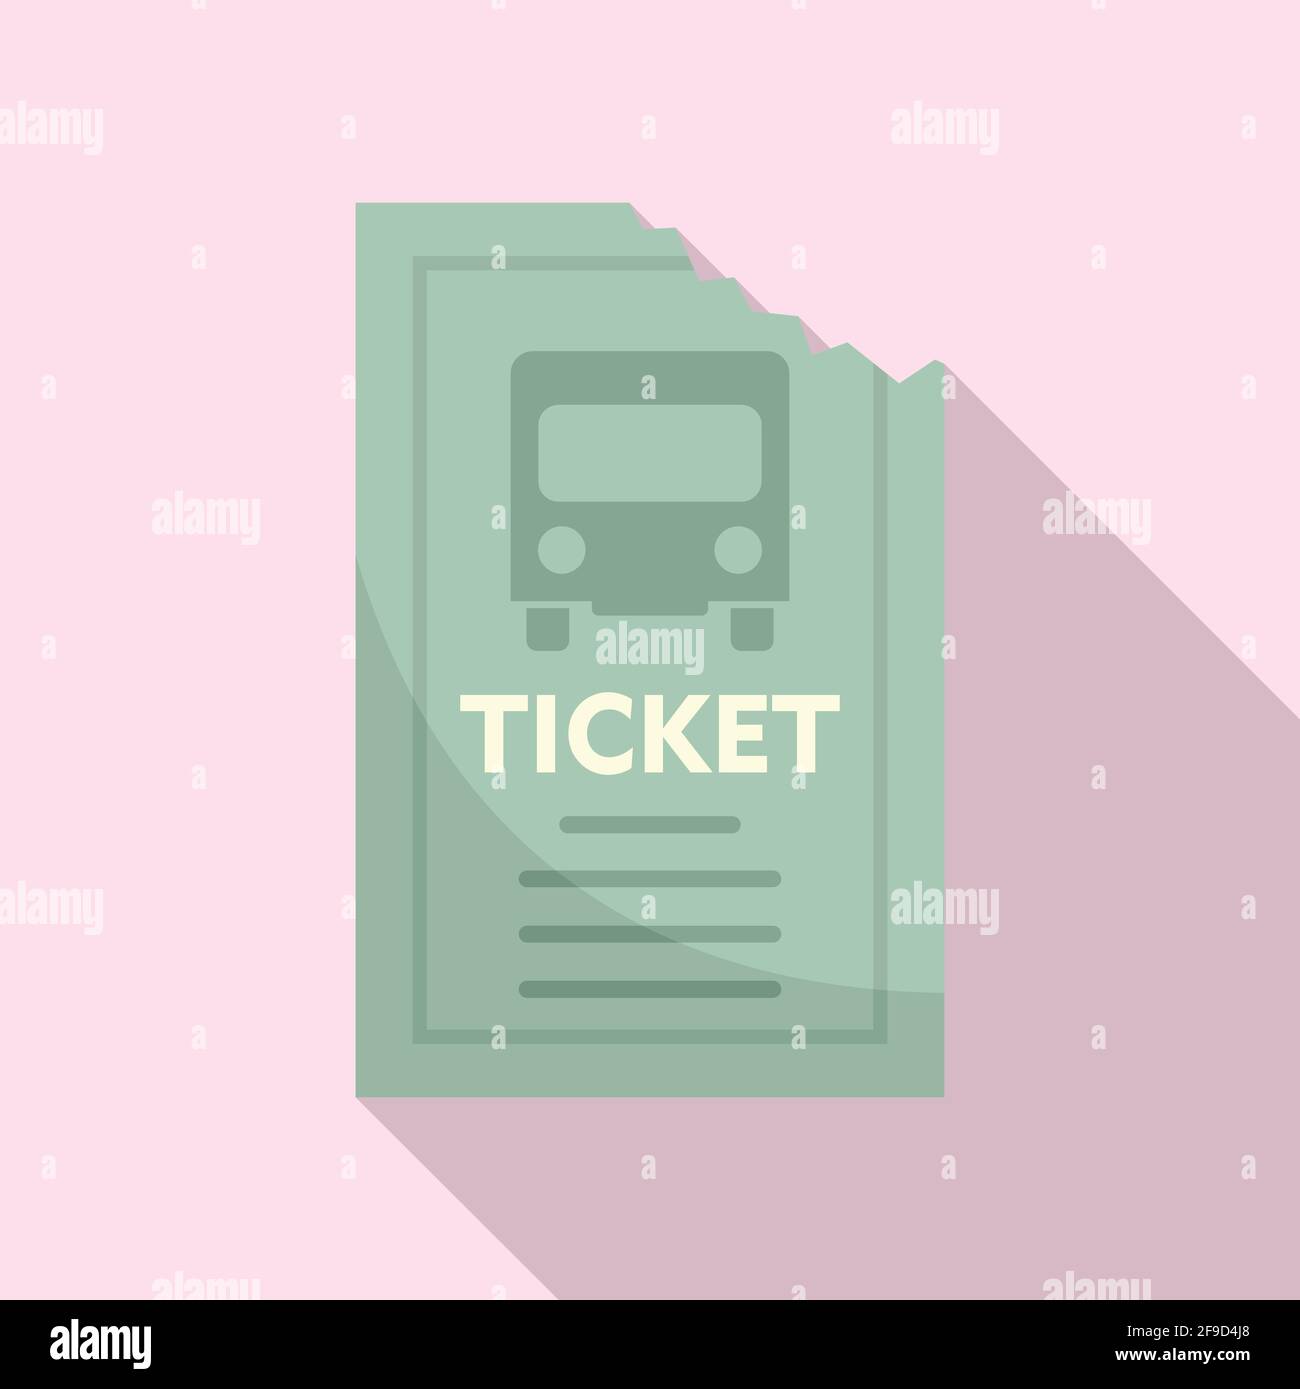 Public bus ticket icon, flat style Stock Vector